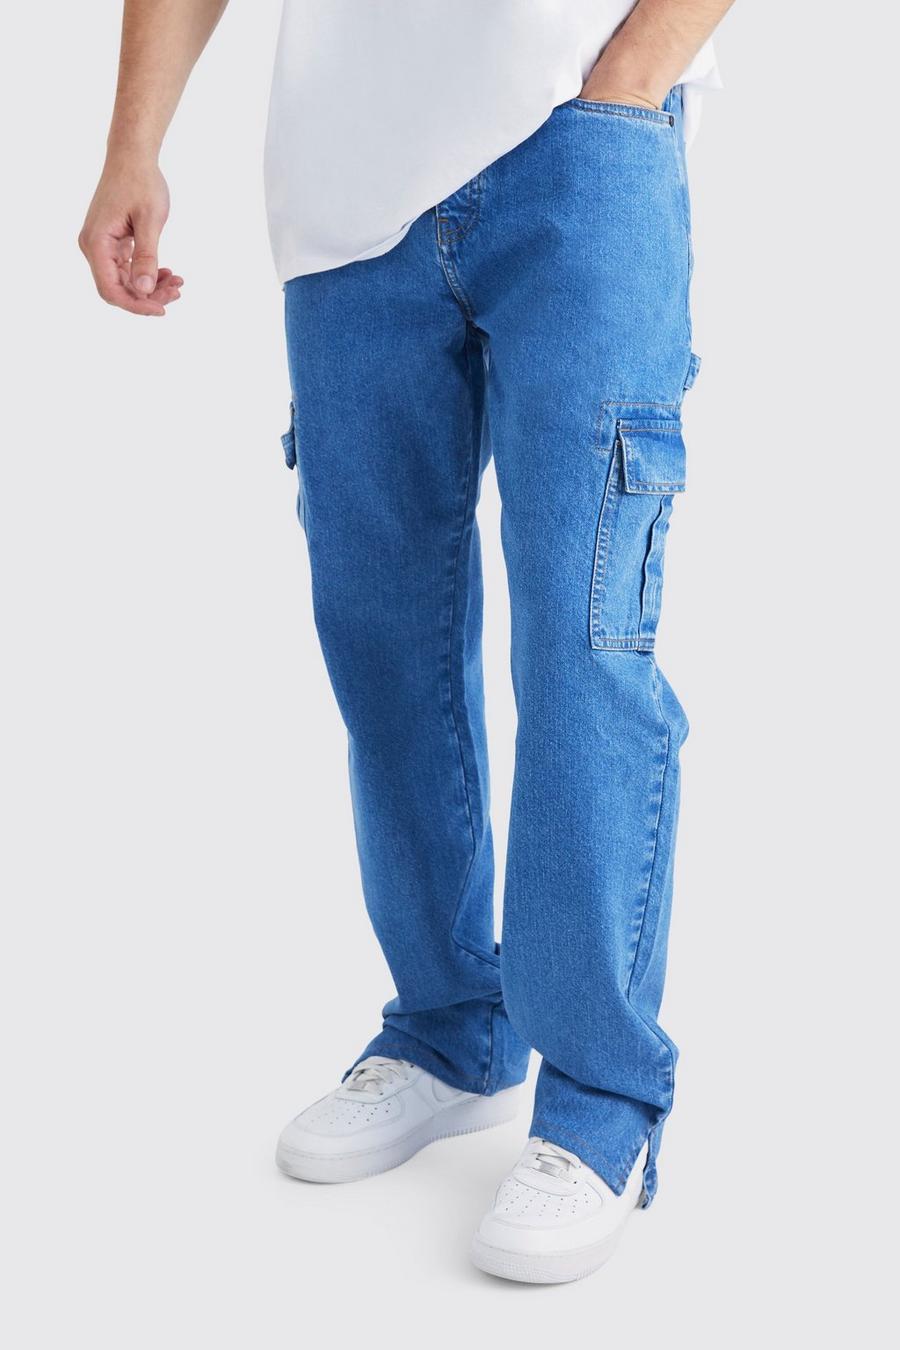 Tall lockere Jeans mit geteiltem Saum, Antique blue